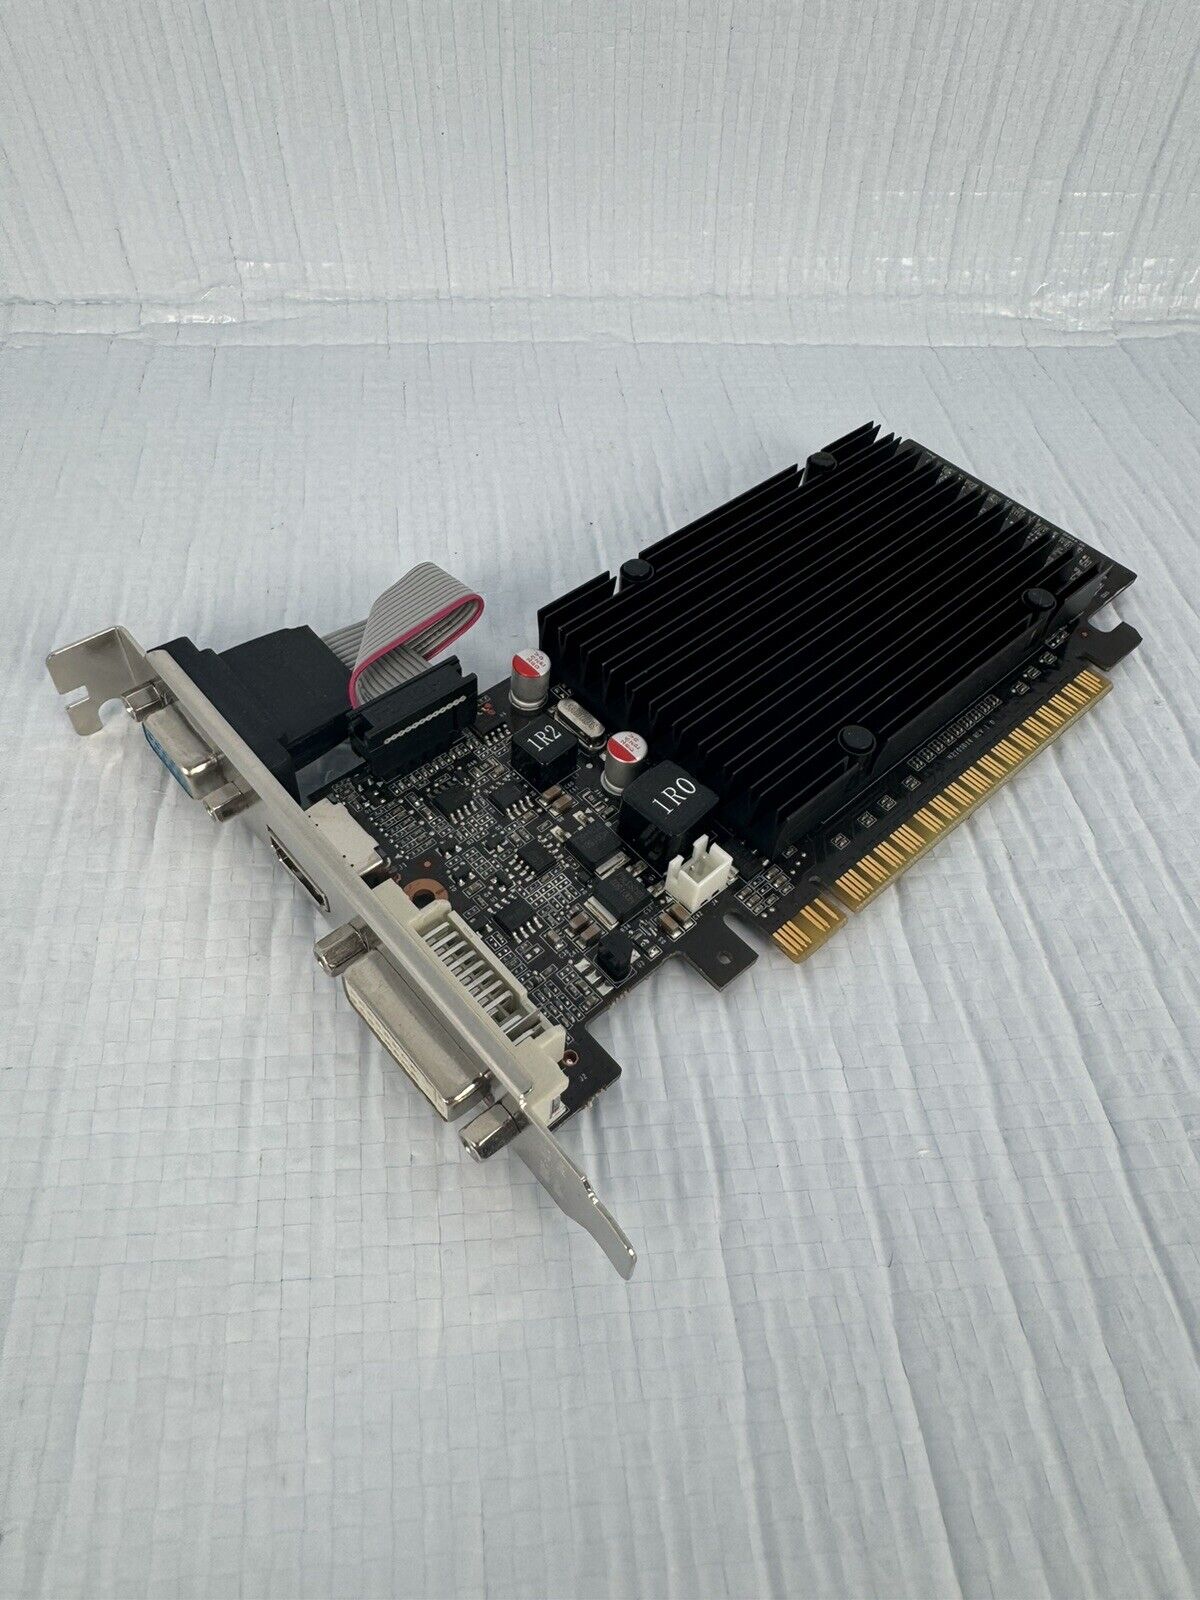 EVGA GeForce 8400 GS 01G-P3-1303-KR 1GB GDDR3 HDMI/DVI/VGA GRAPHICS CARD